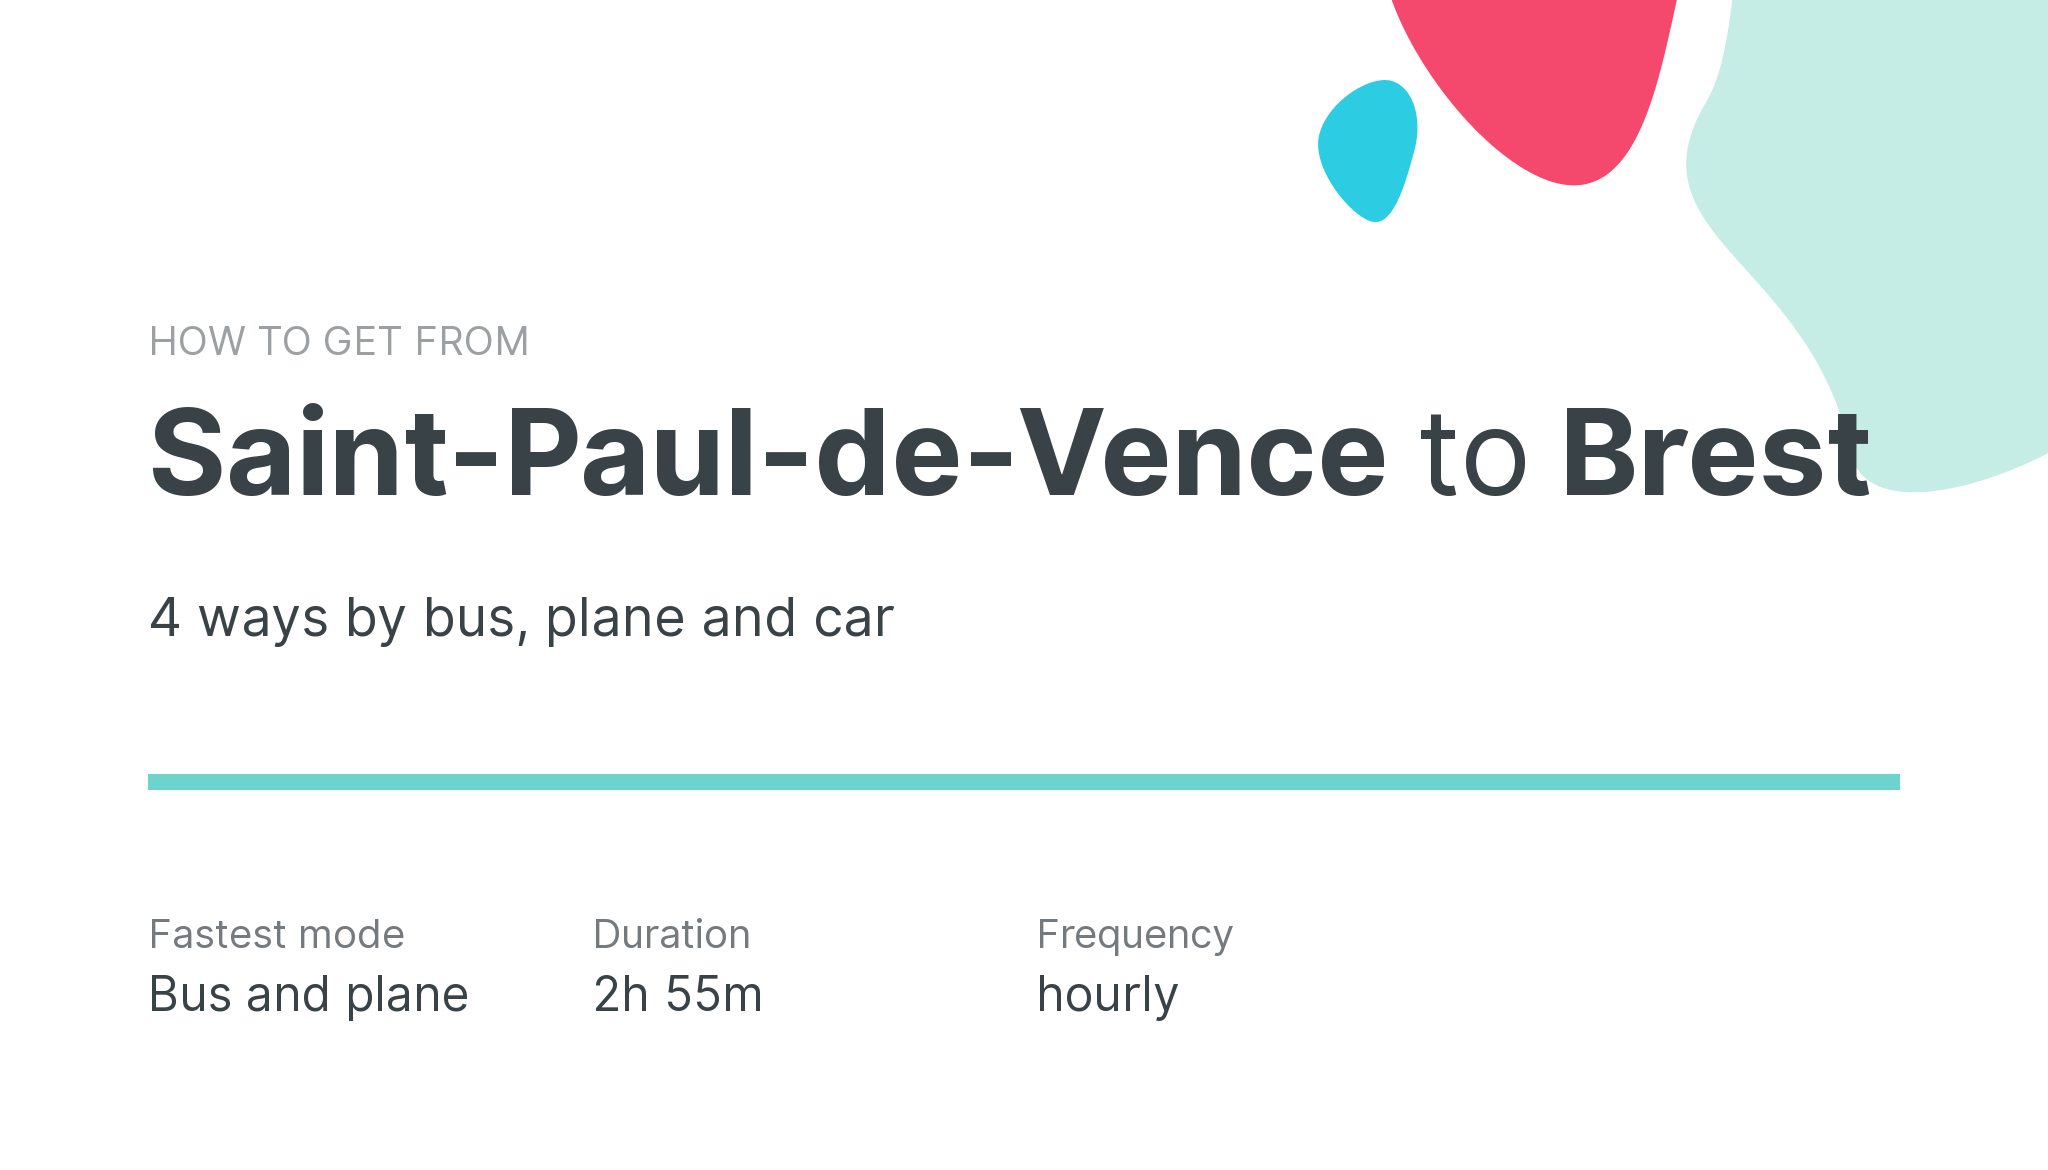 How do I get from Saint-Paul-de-Vence to Brest